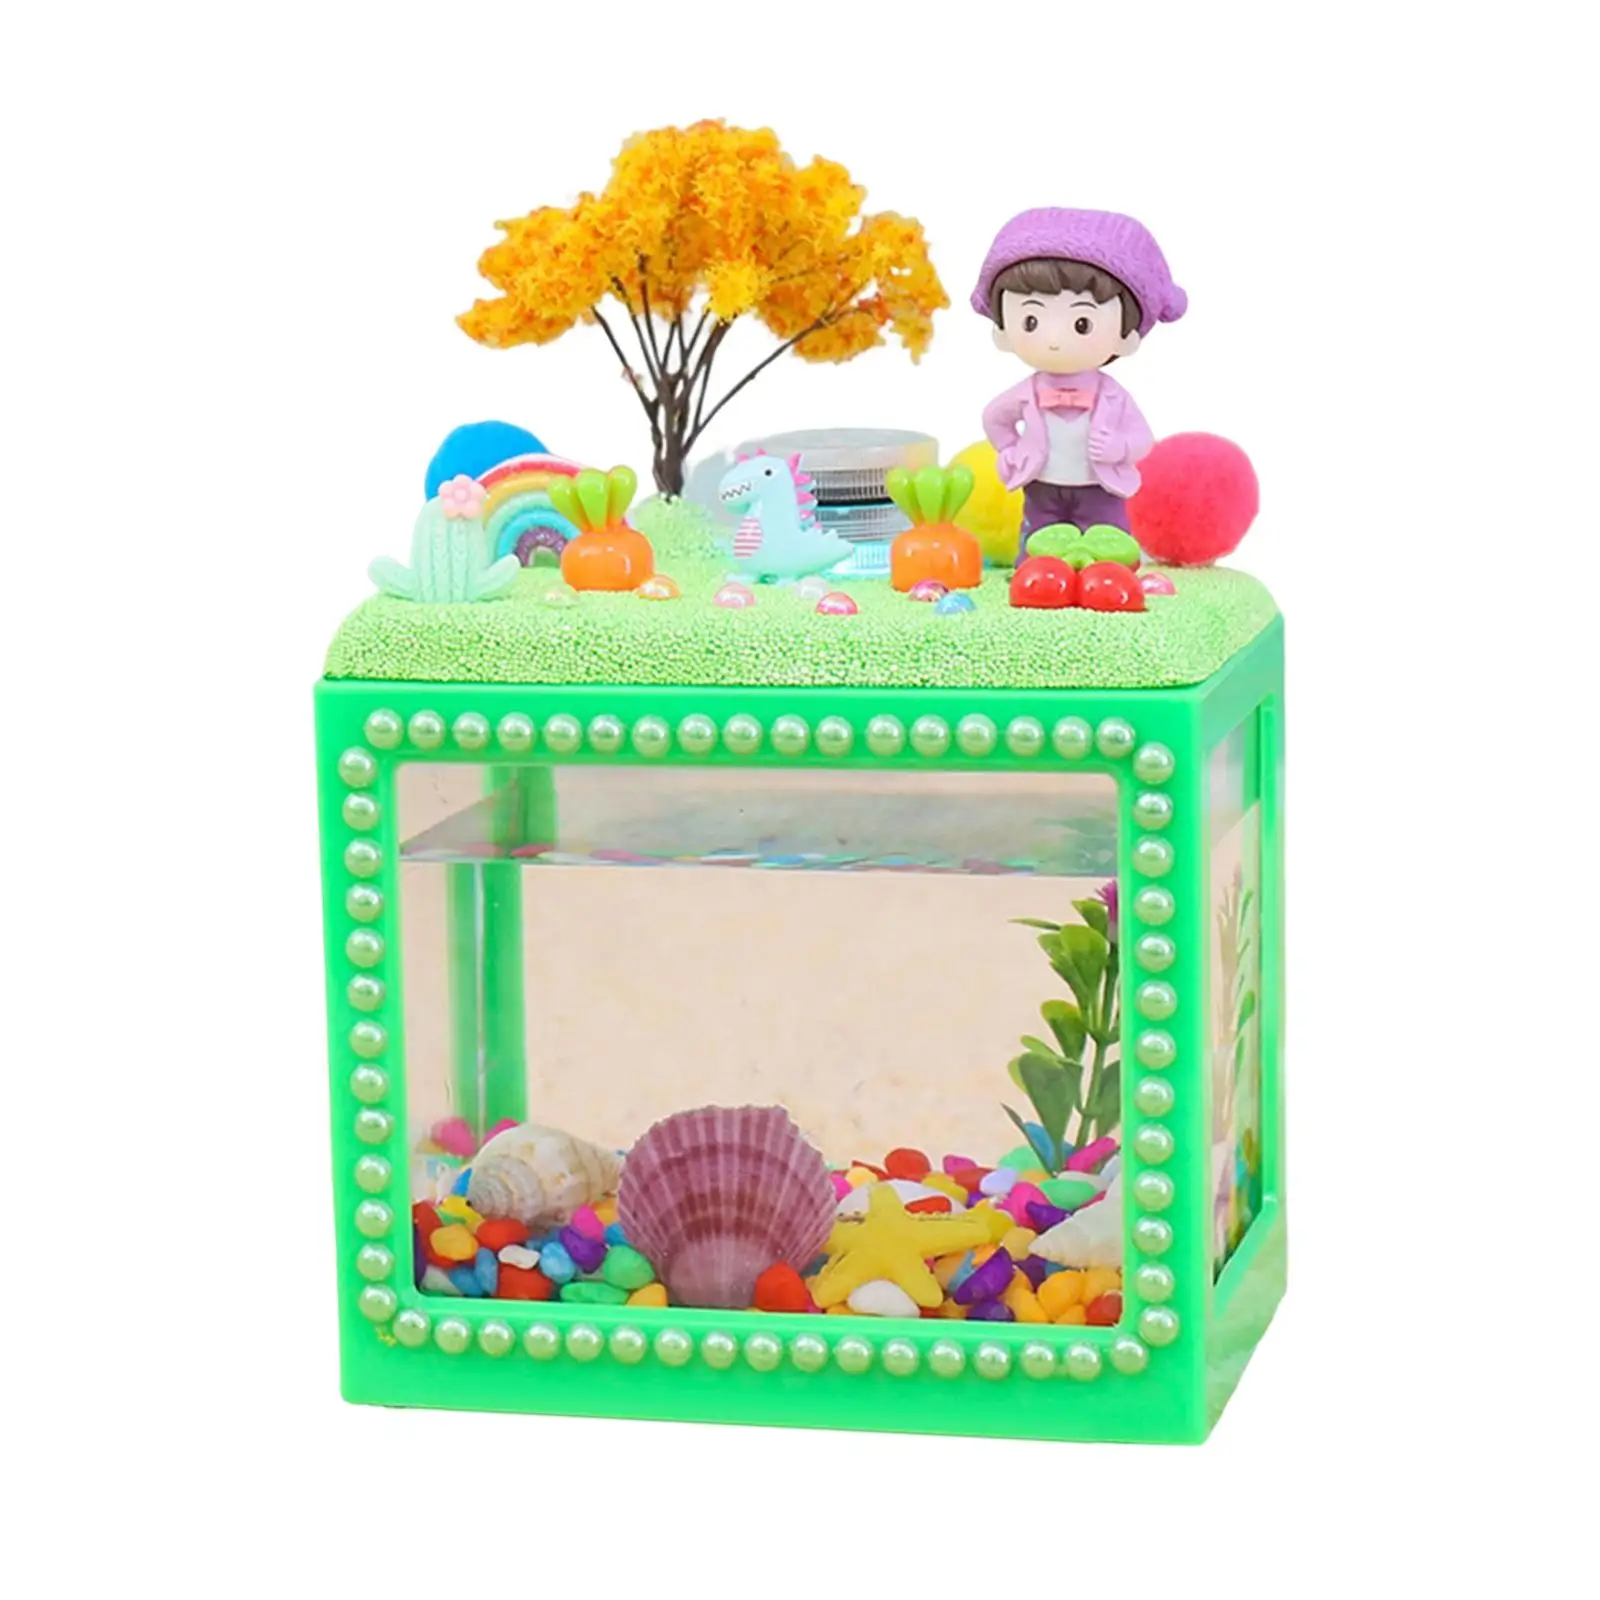 DIY Aquarium for Kids Micro Blocks with Figures Christmas & Birthday Gift